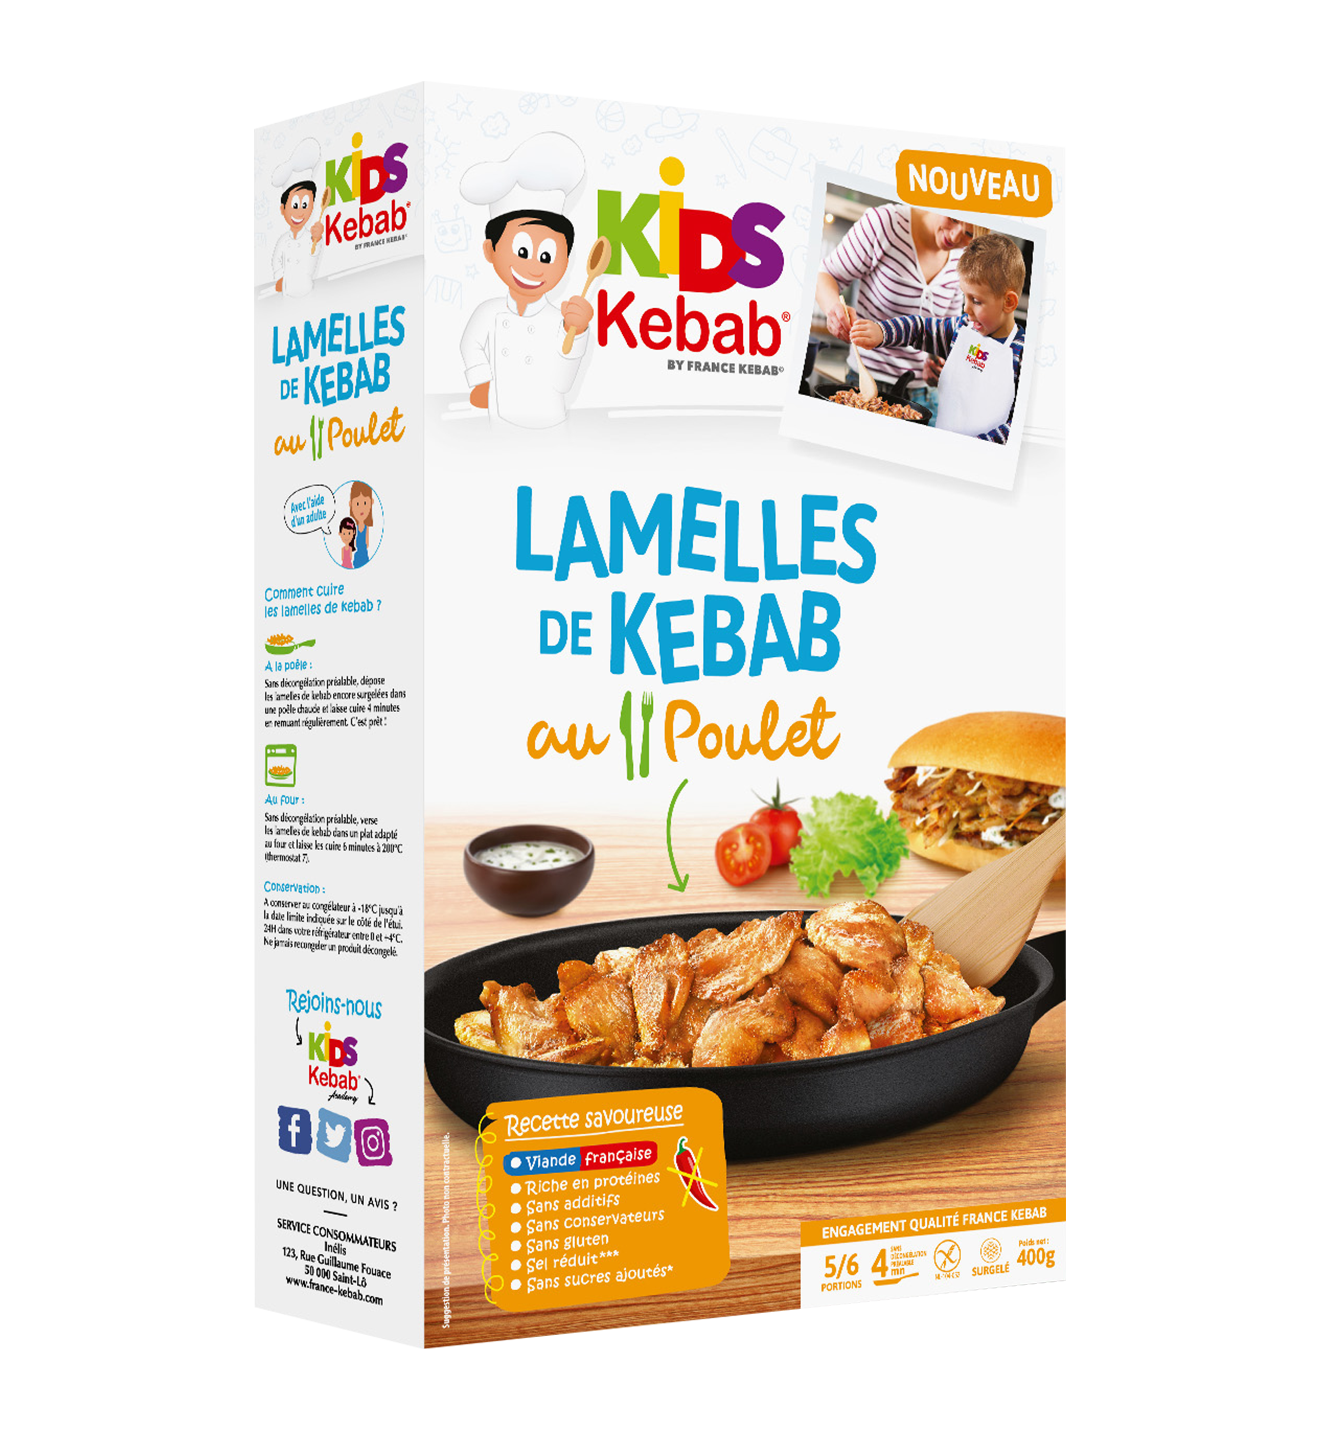 Les Lamelles de Kebab Kids Kebab